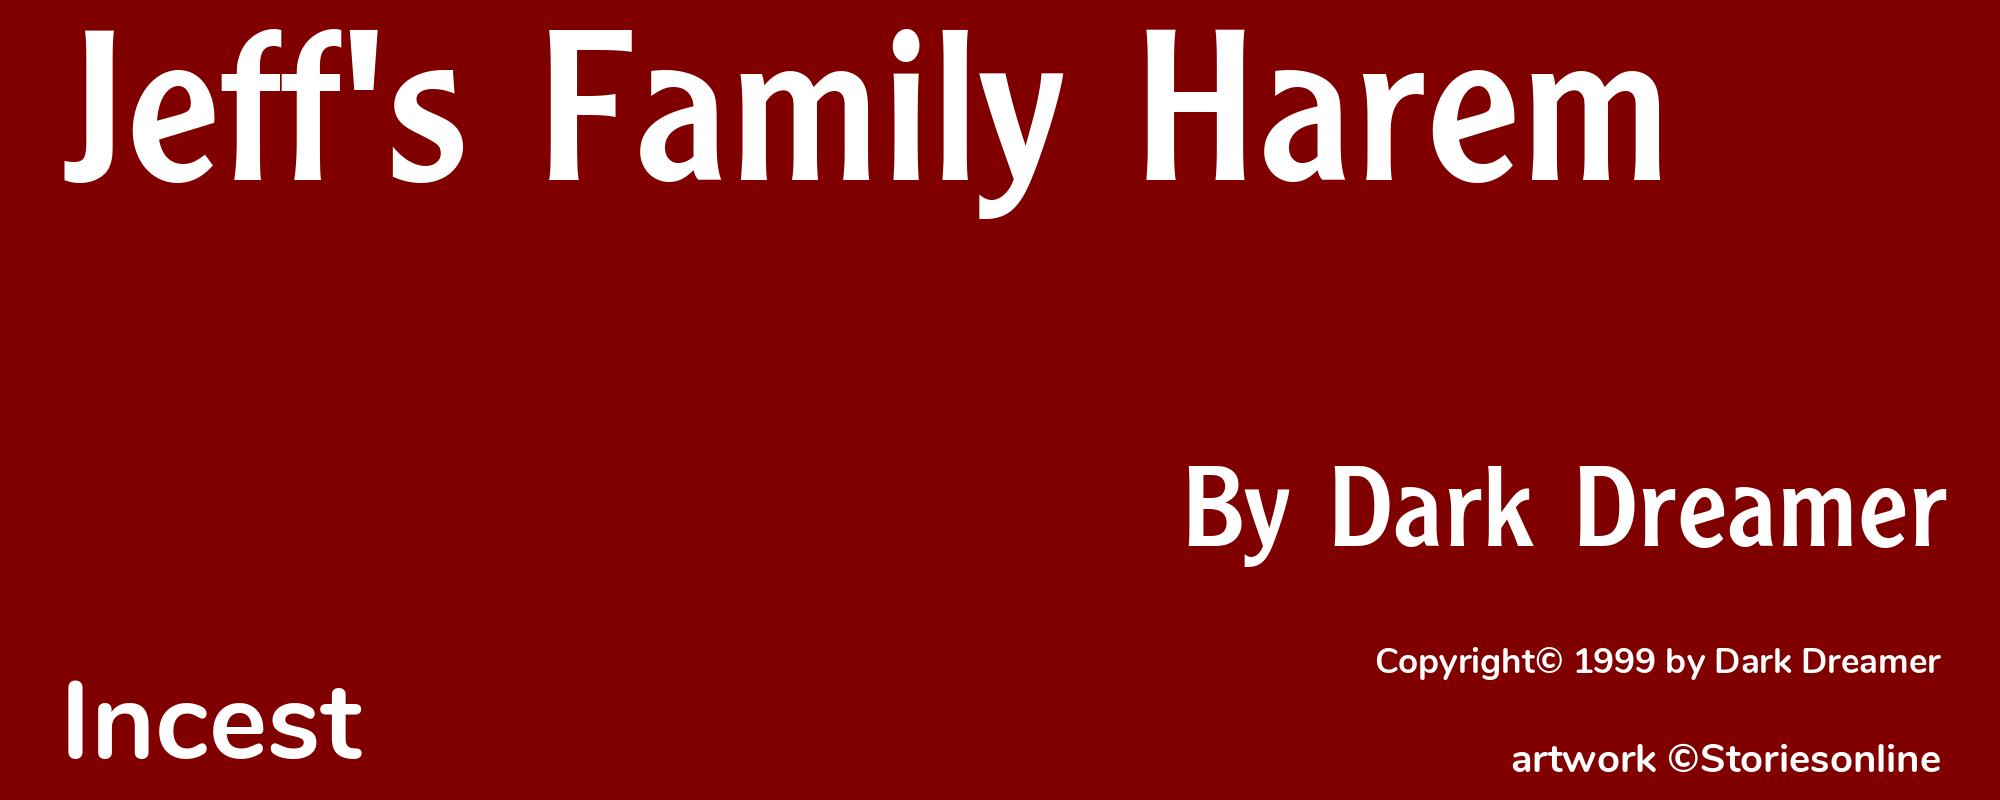 Jeff's Family Harem - Cover